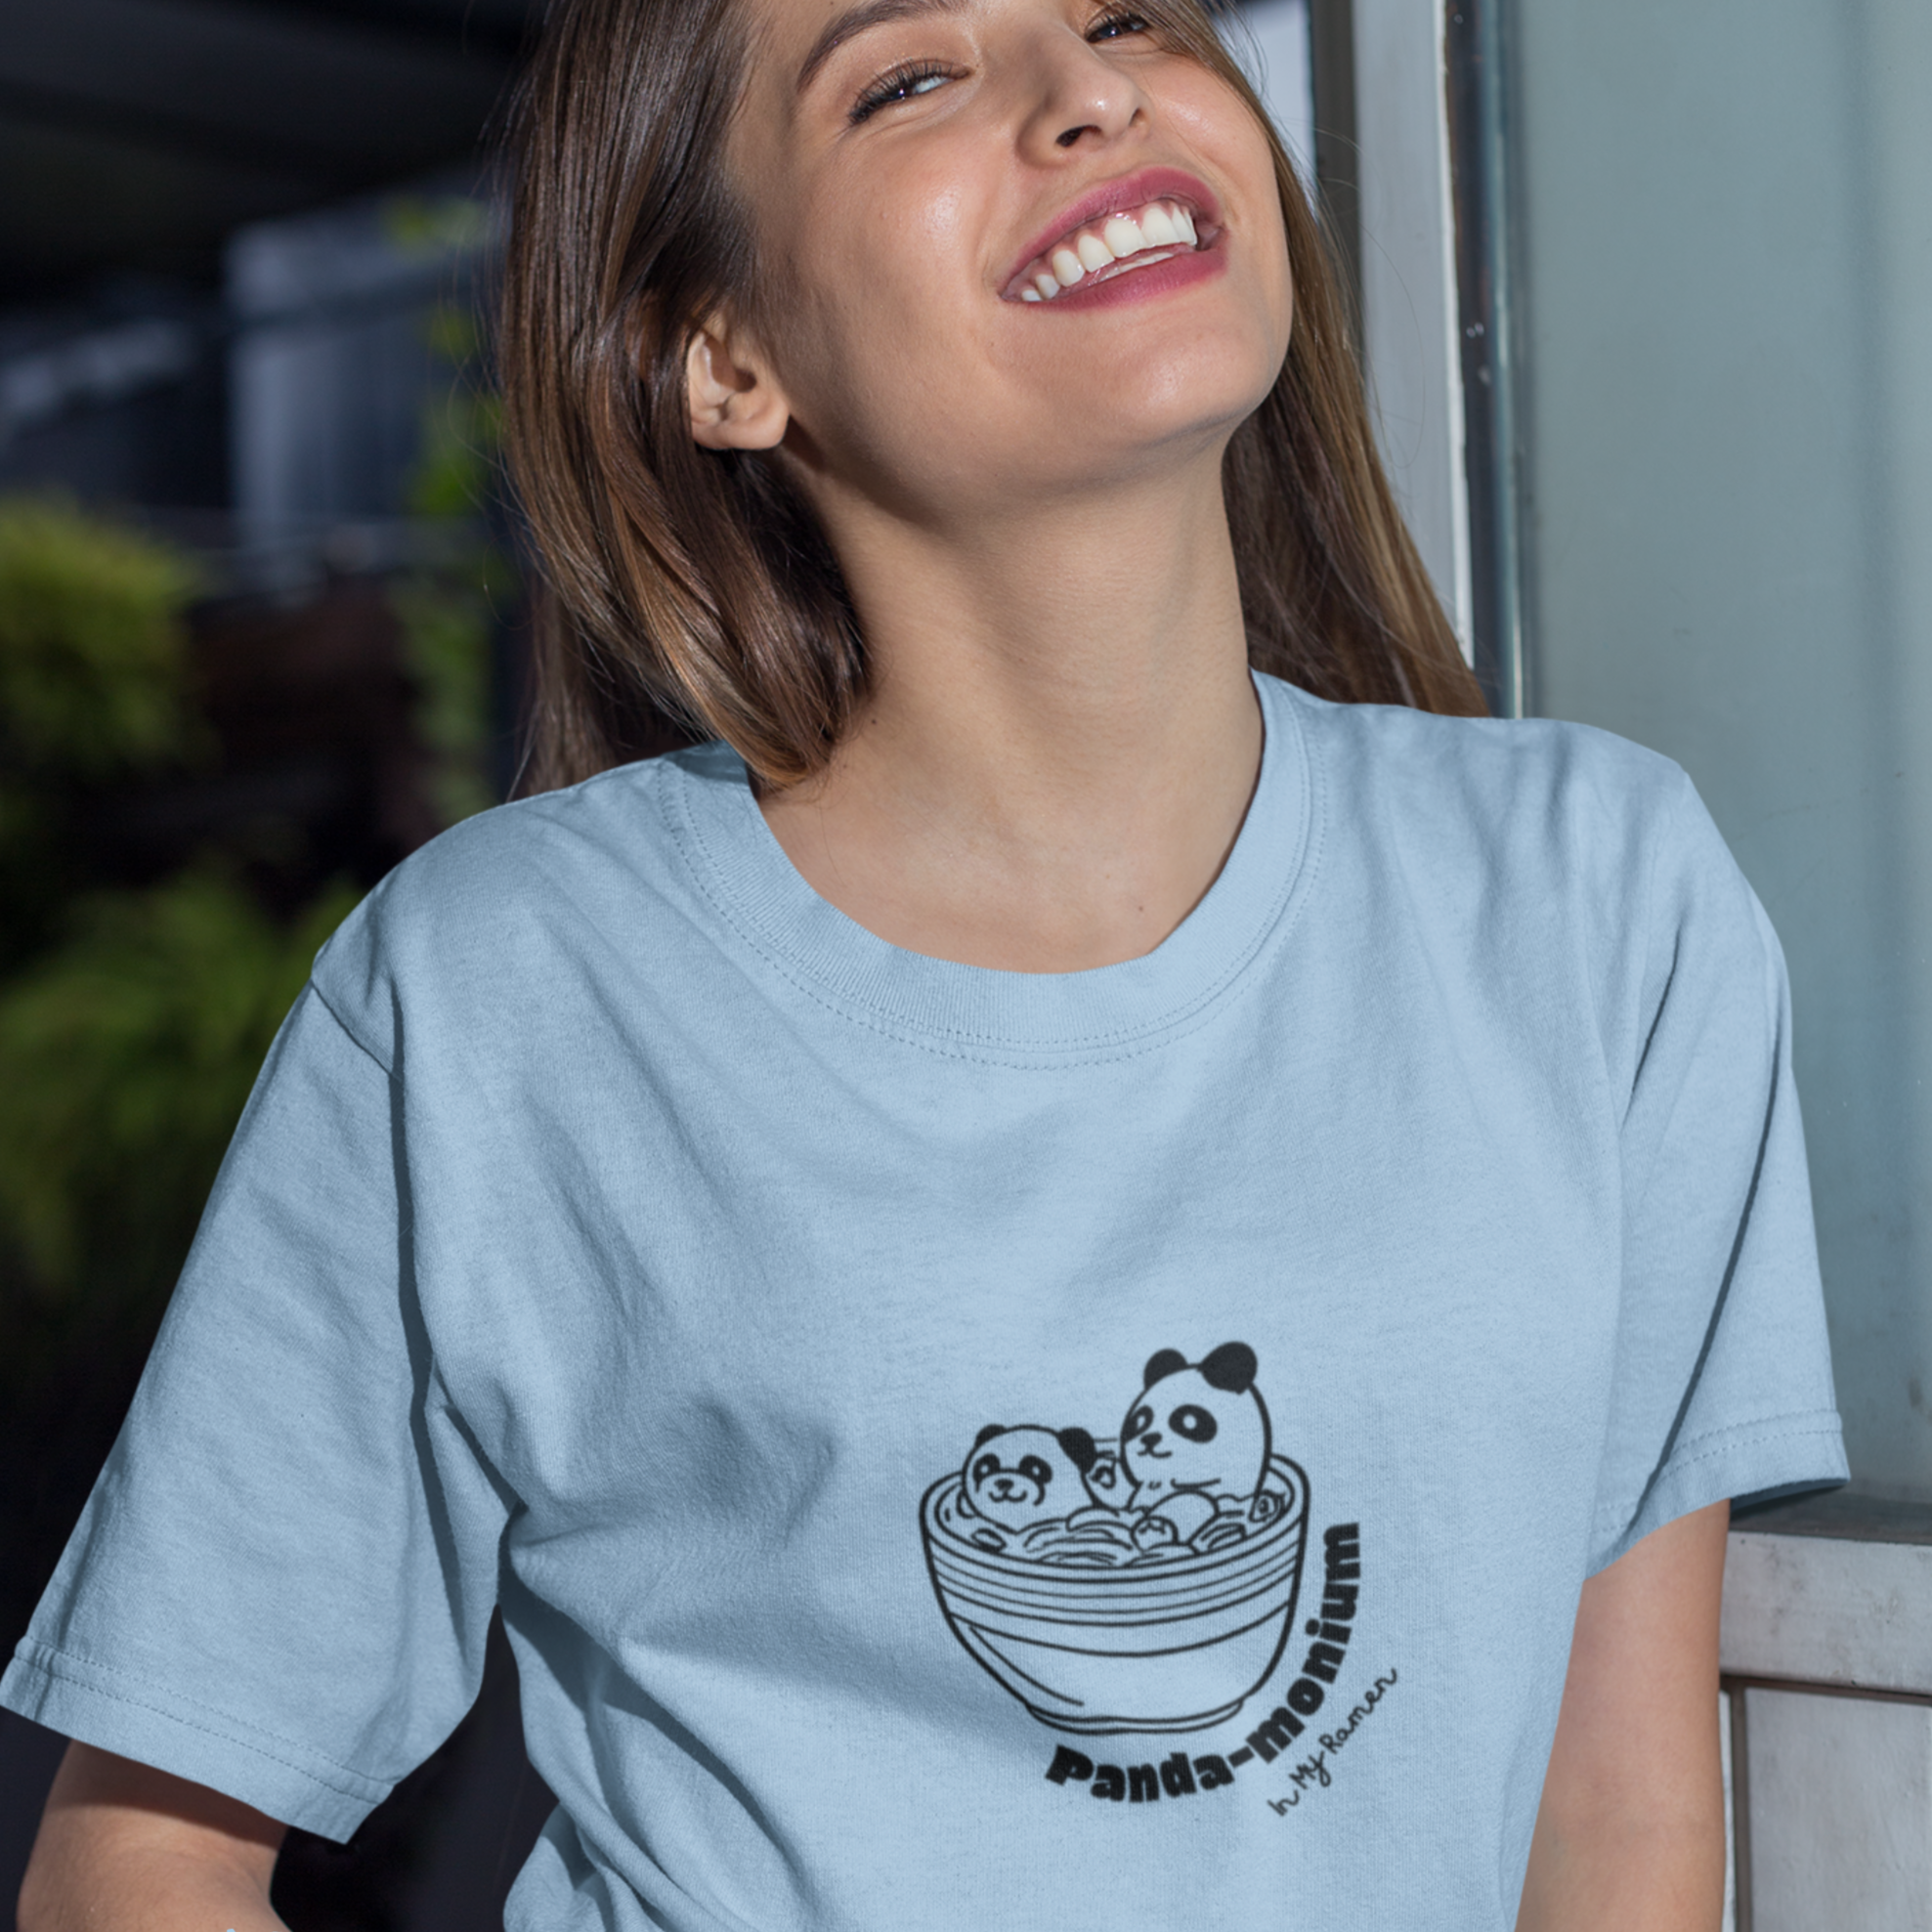 Ramen T-Shirt with Cute Panda Design: Japanese Foodie Shirt with Ramen Art